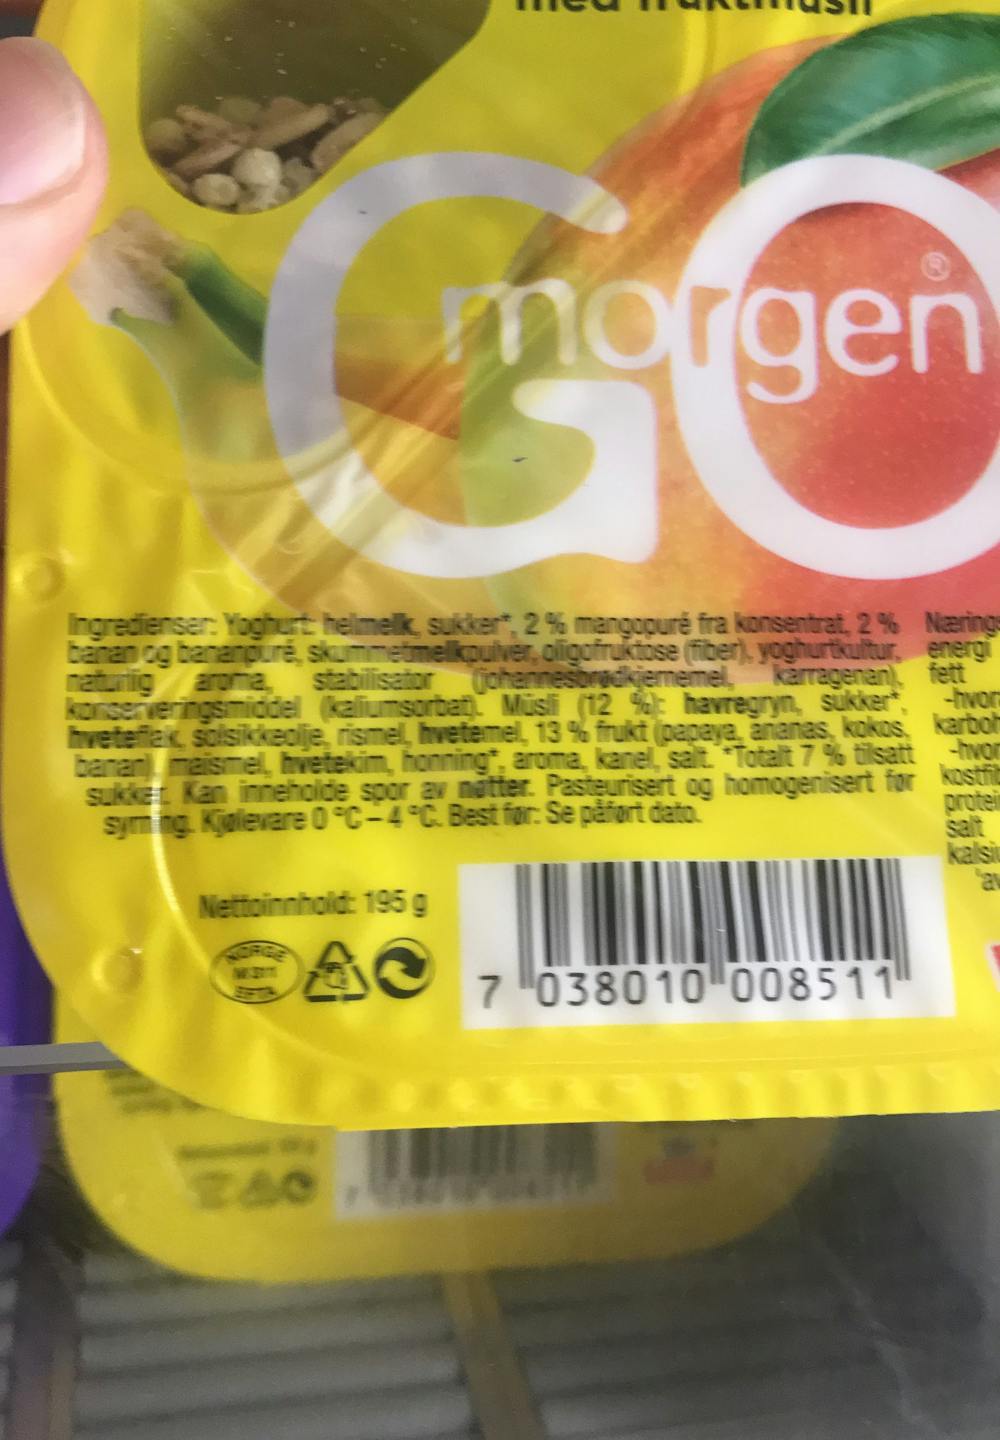 Ingredienslisten til Tine Go' morgen mango- og bananyoghurt